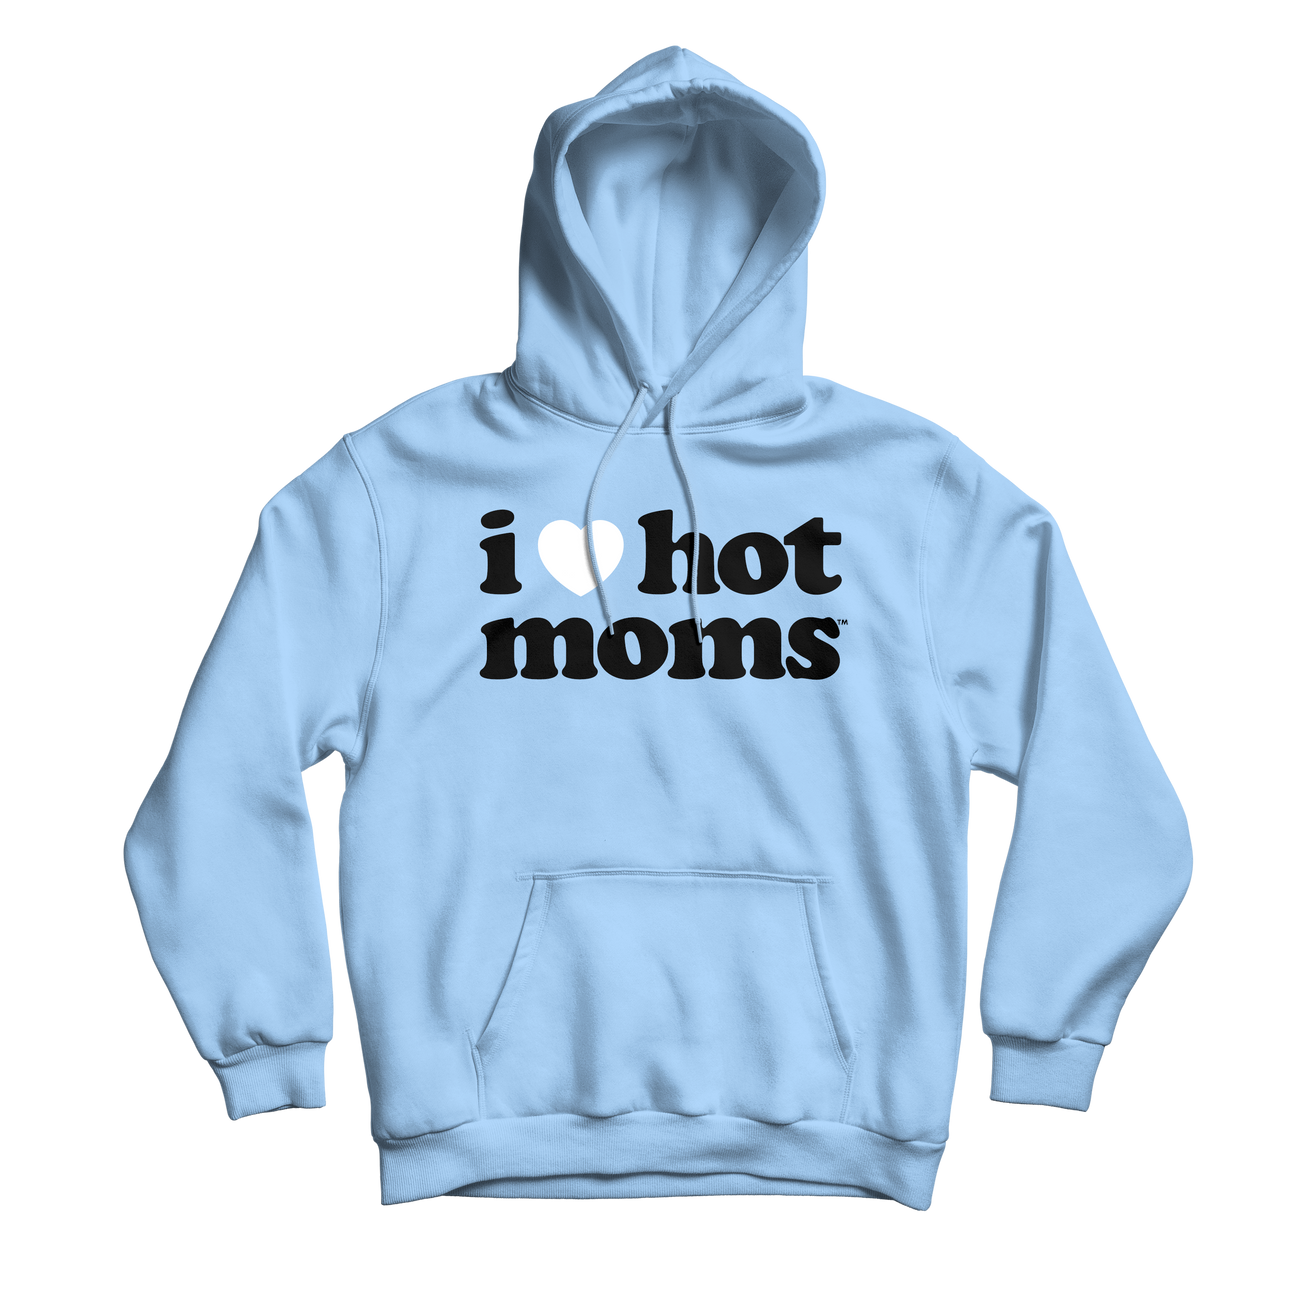 Mom's Favorite Mens Sweatshirts and Hoodies - Louisville, Adult Unisex, Size: 3XL, Blue